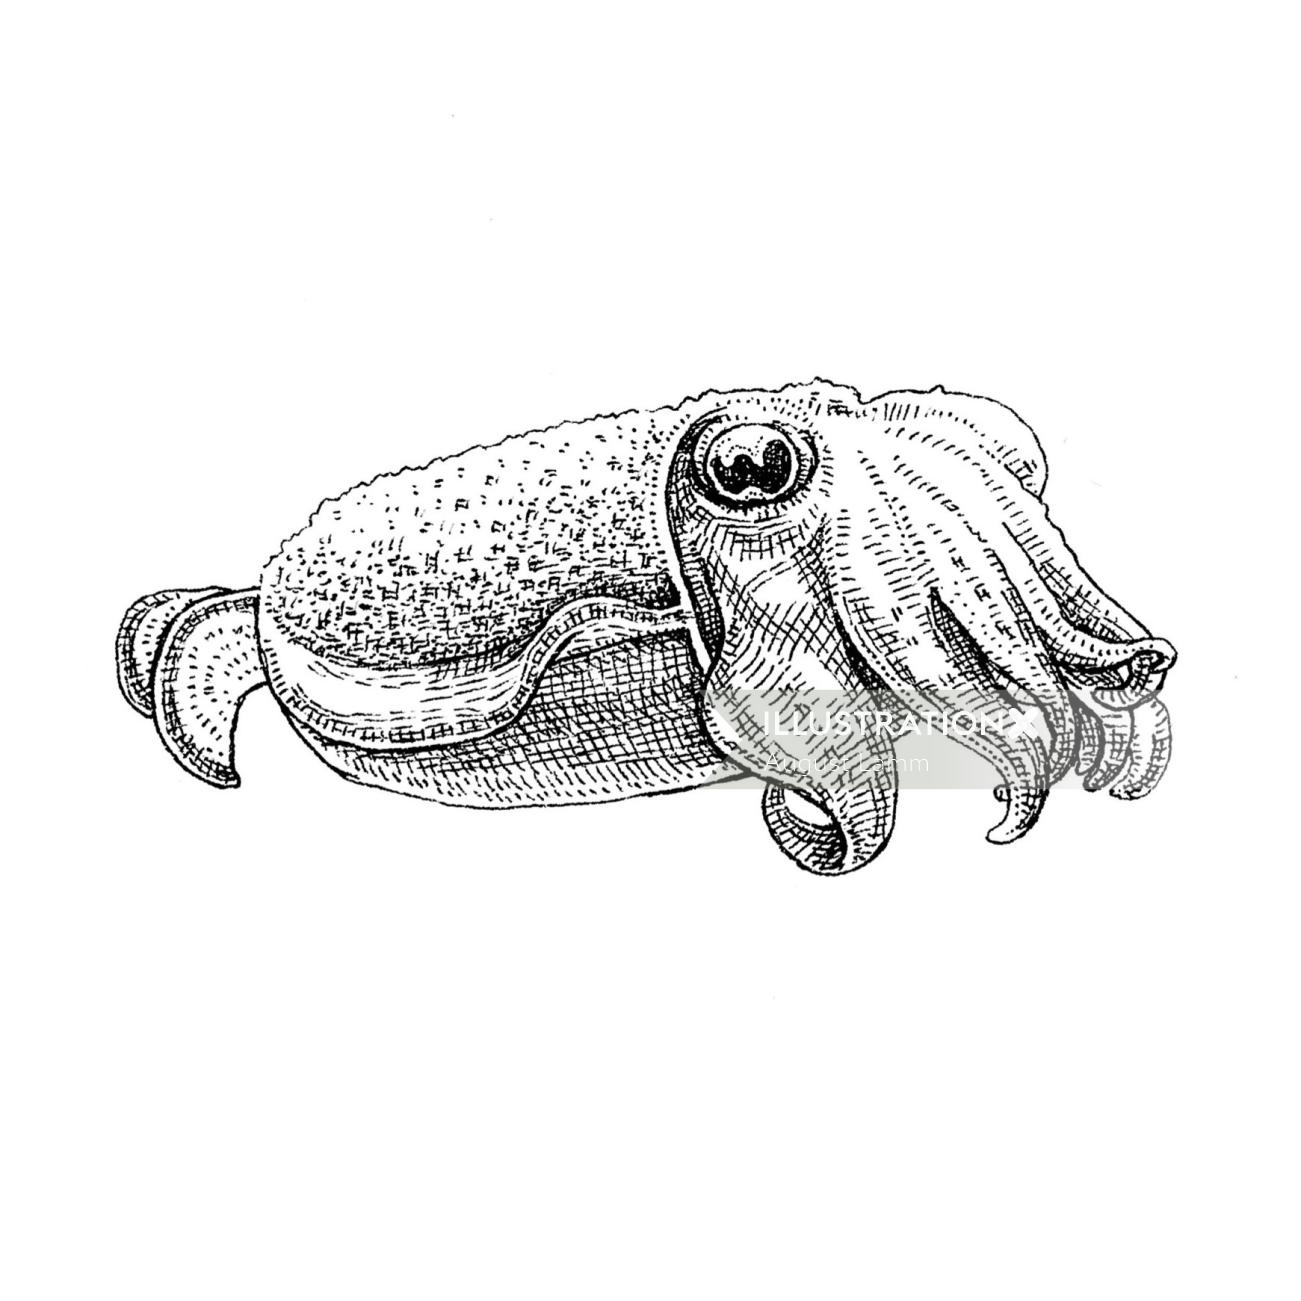 Cuttlefish line illustration by August Lamm